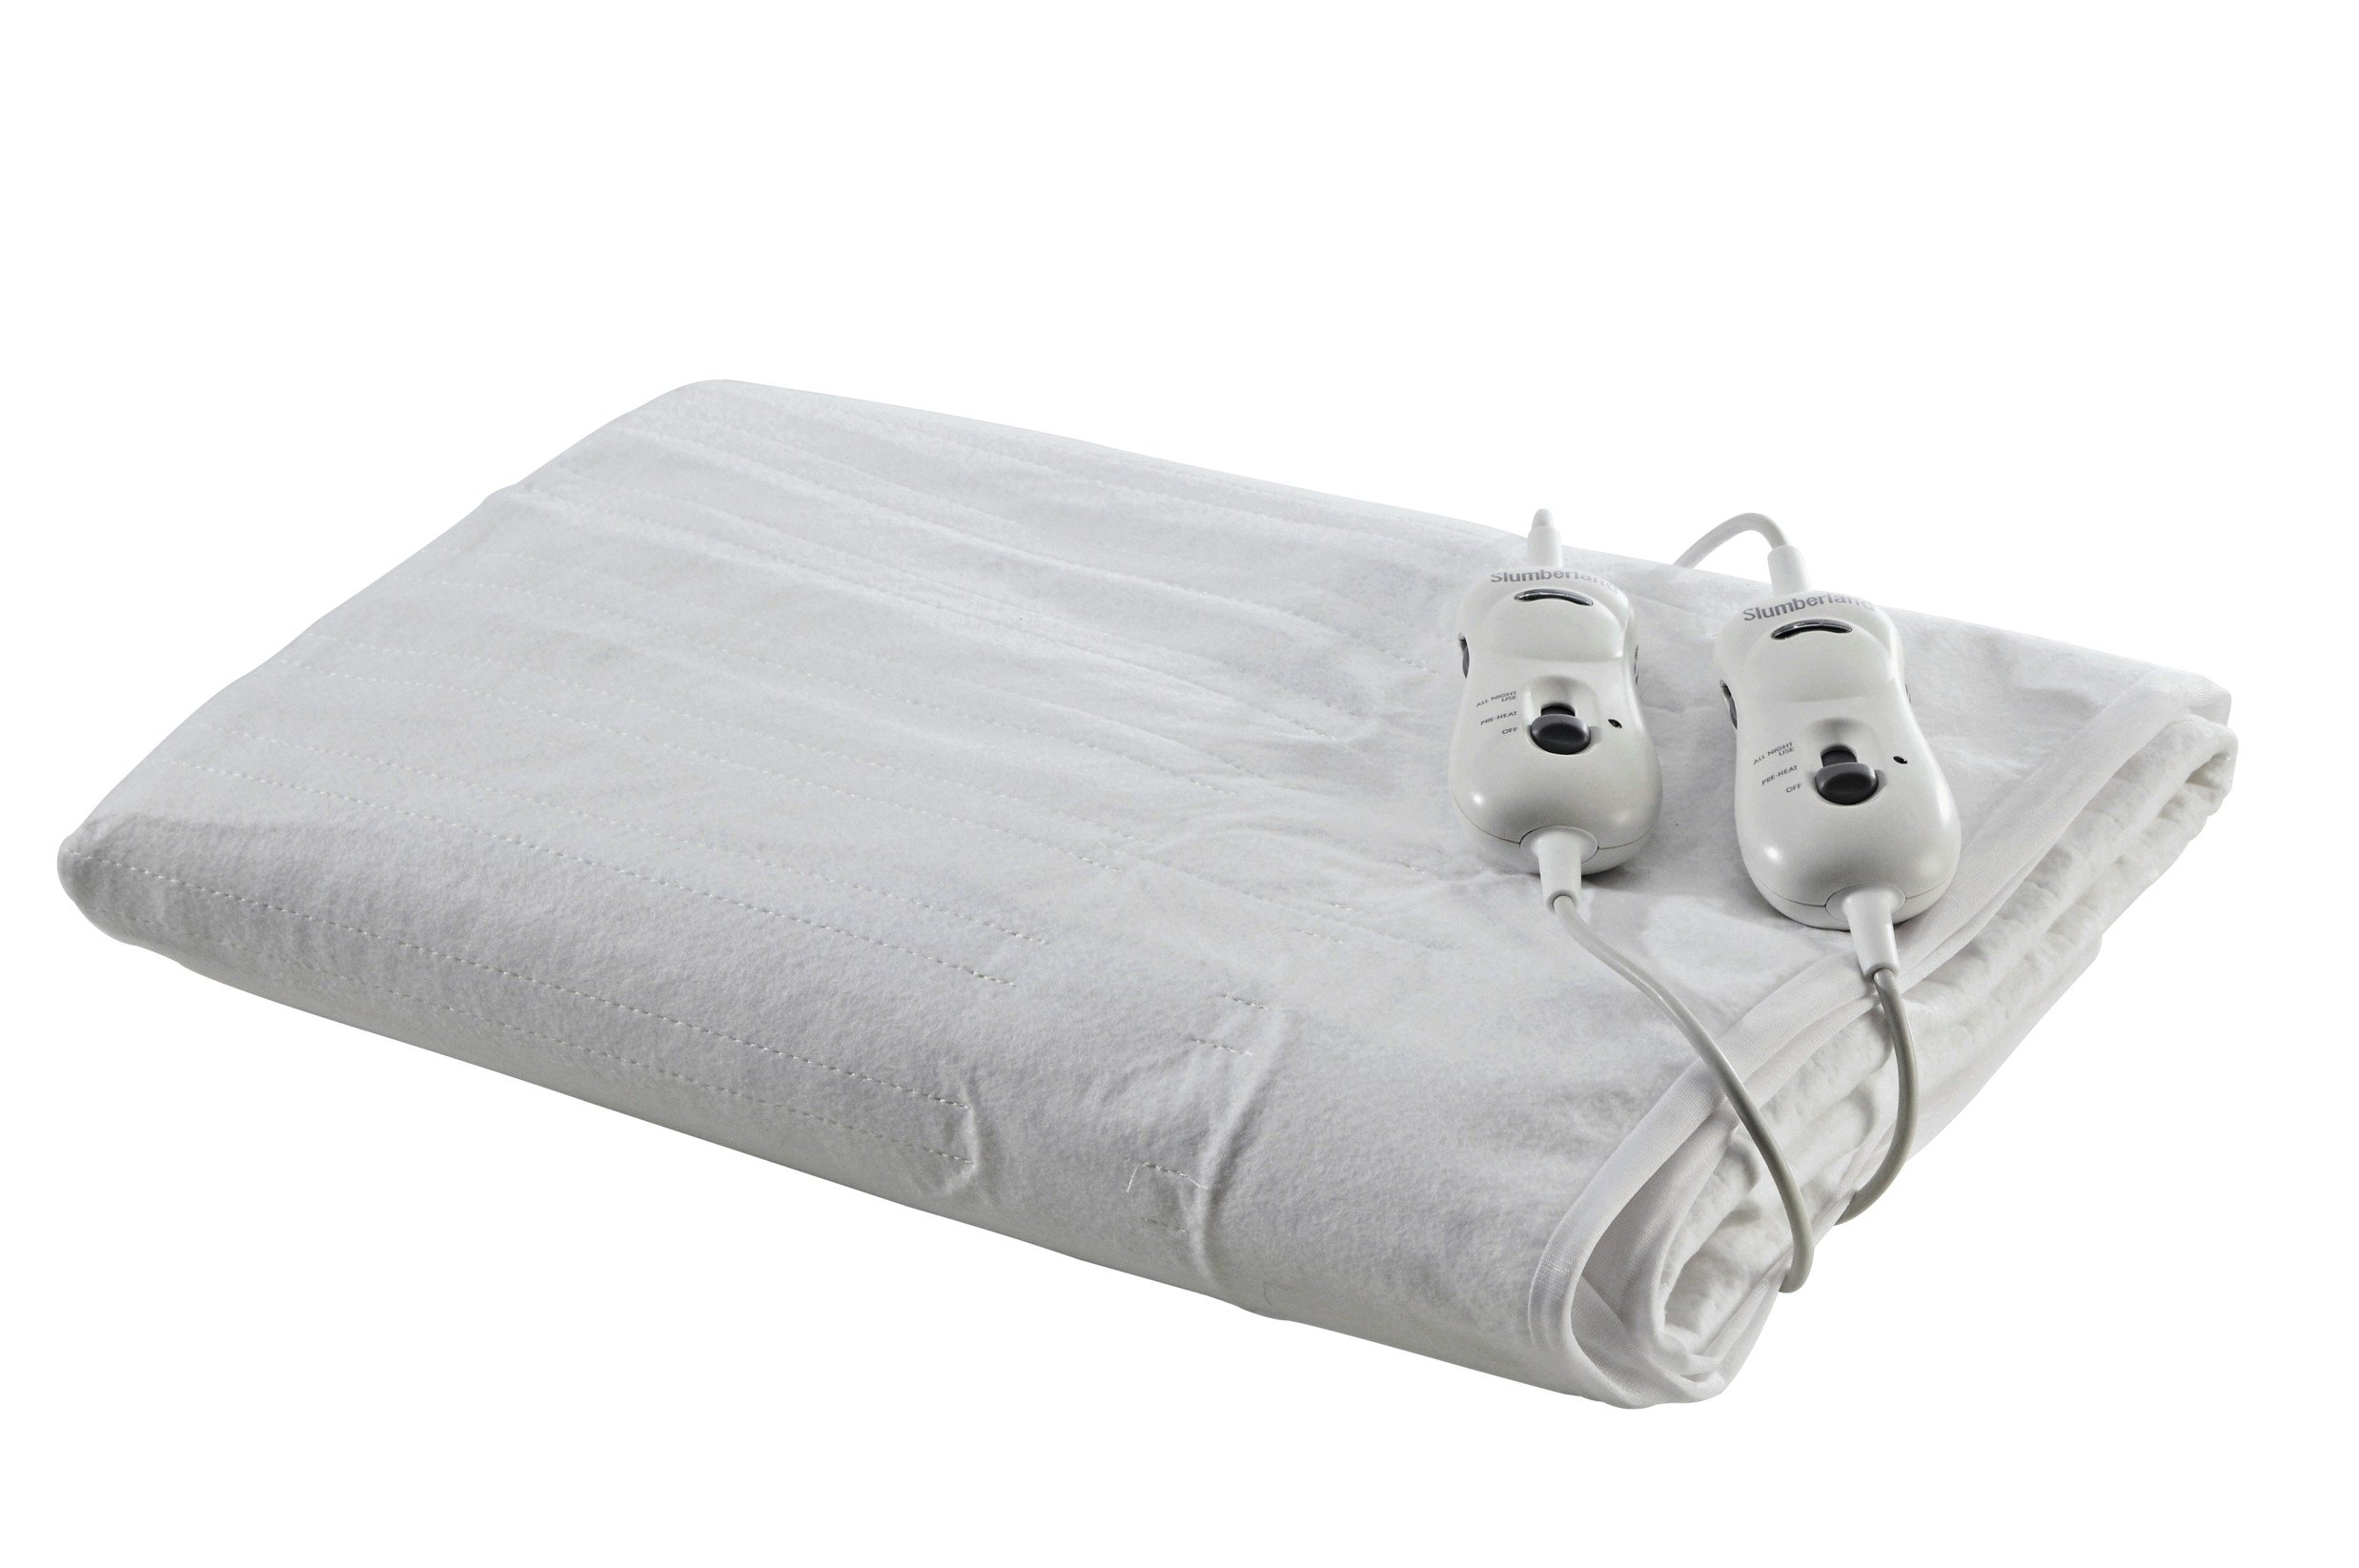 slumberland penzance mattress reviews